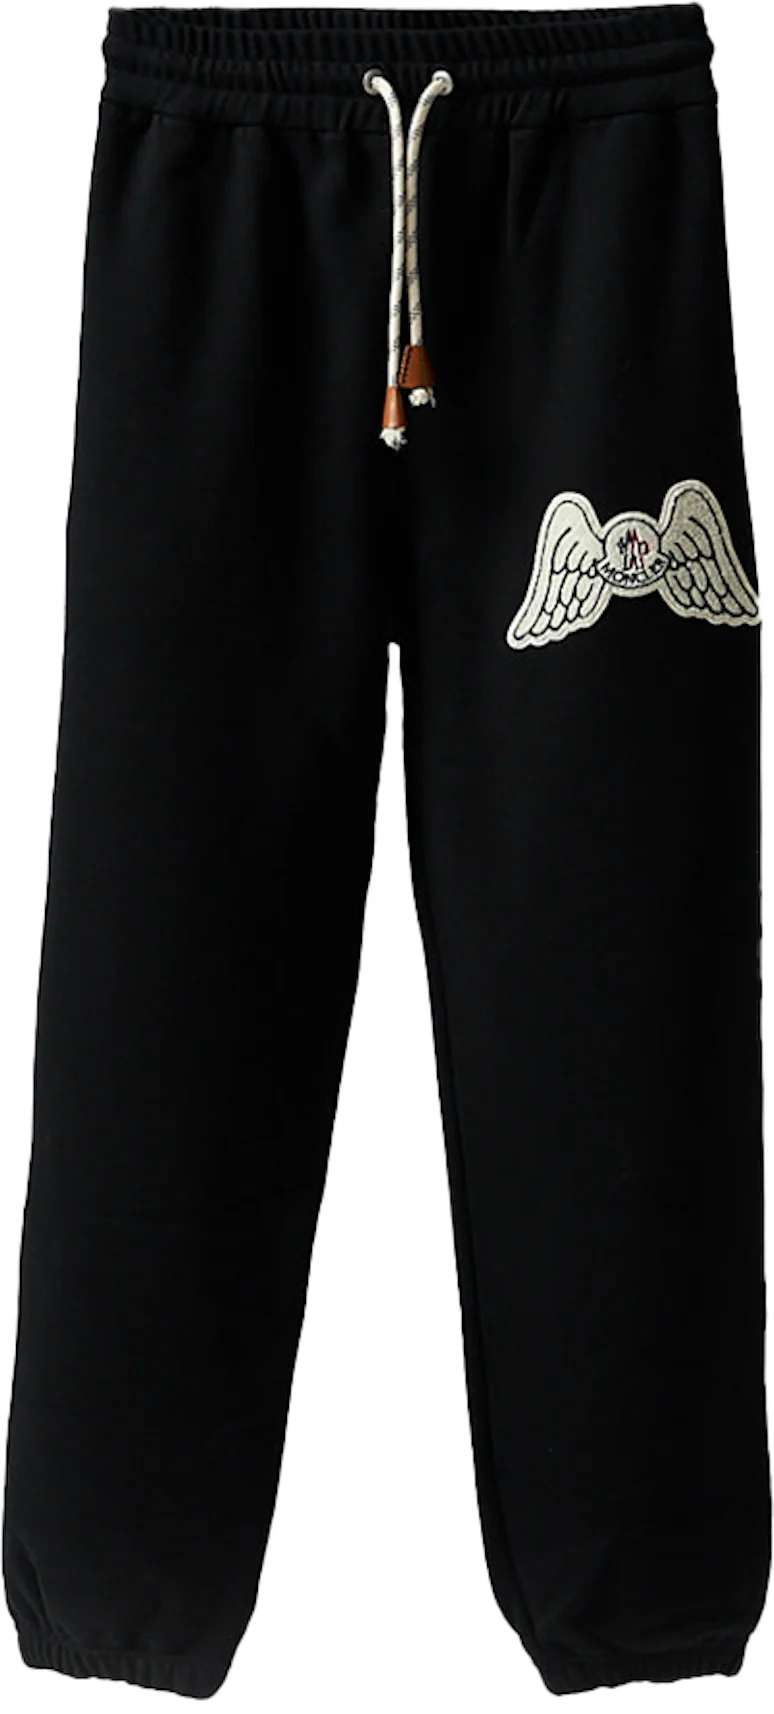 Men's luxury jogging - Black Palm Angels jogging pants with white logo